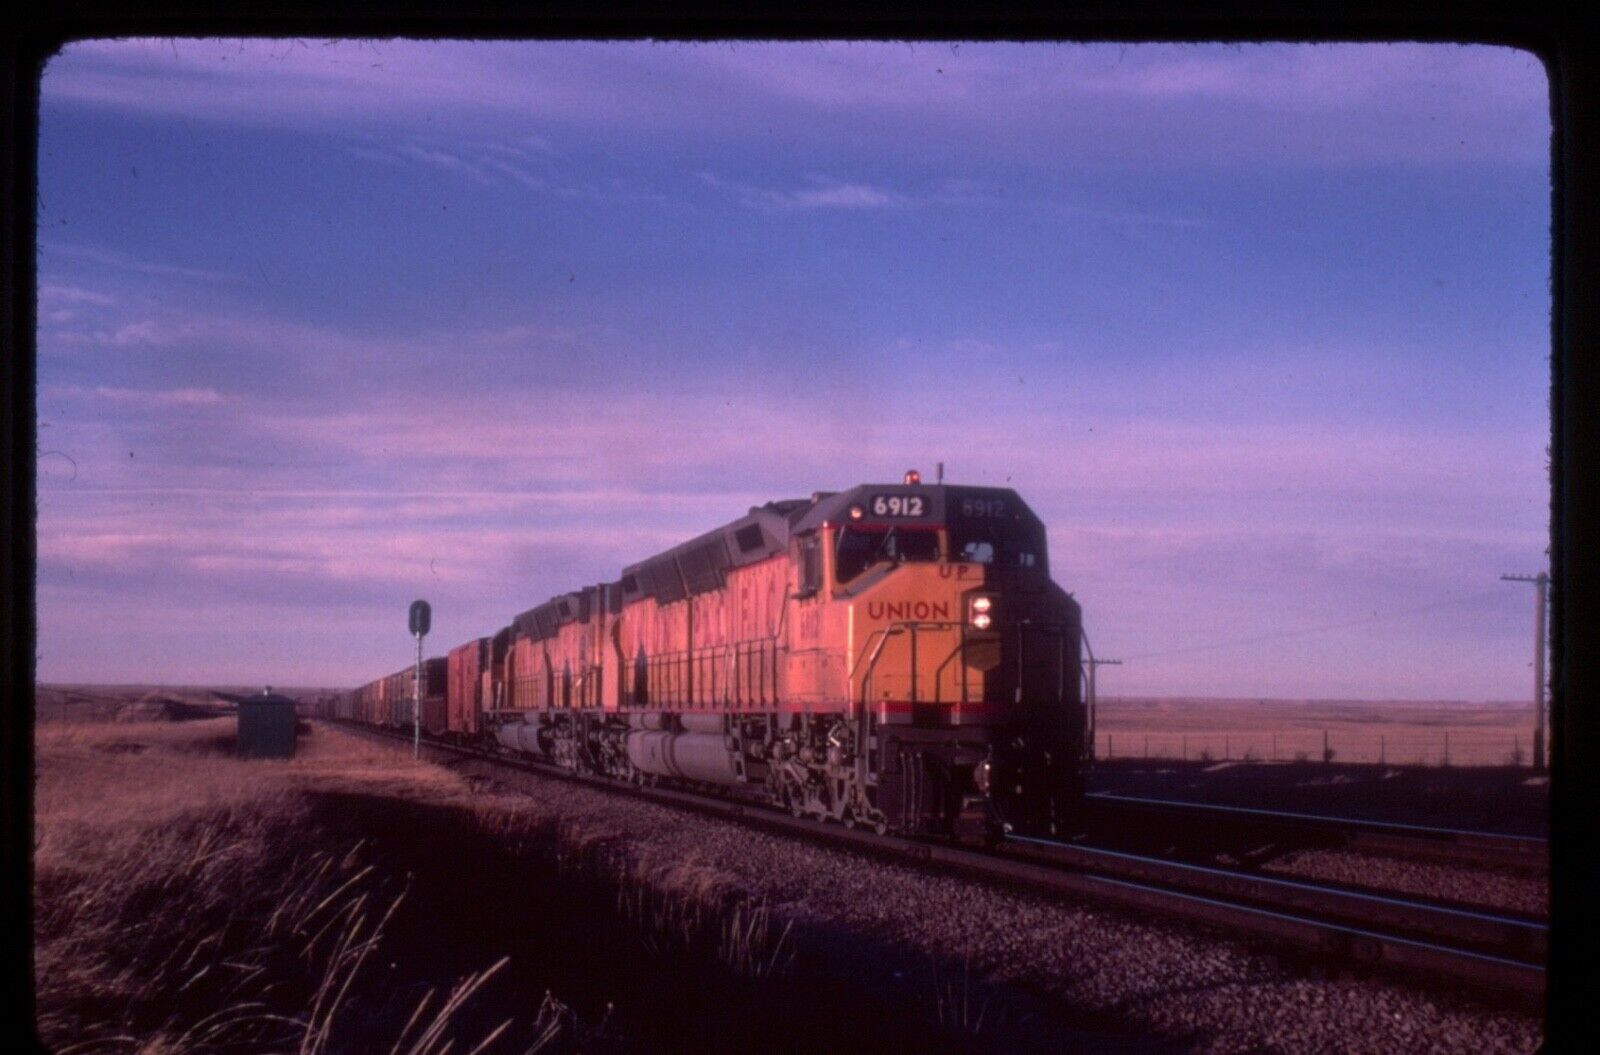 Railroad Slide - Union Pacific #6912 DD40 Locomotive 1970 Speer Wyoming Train WY